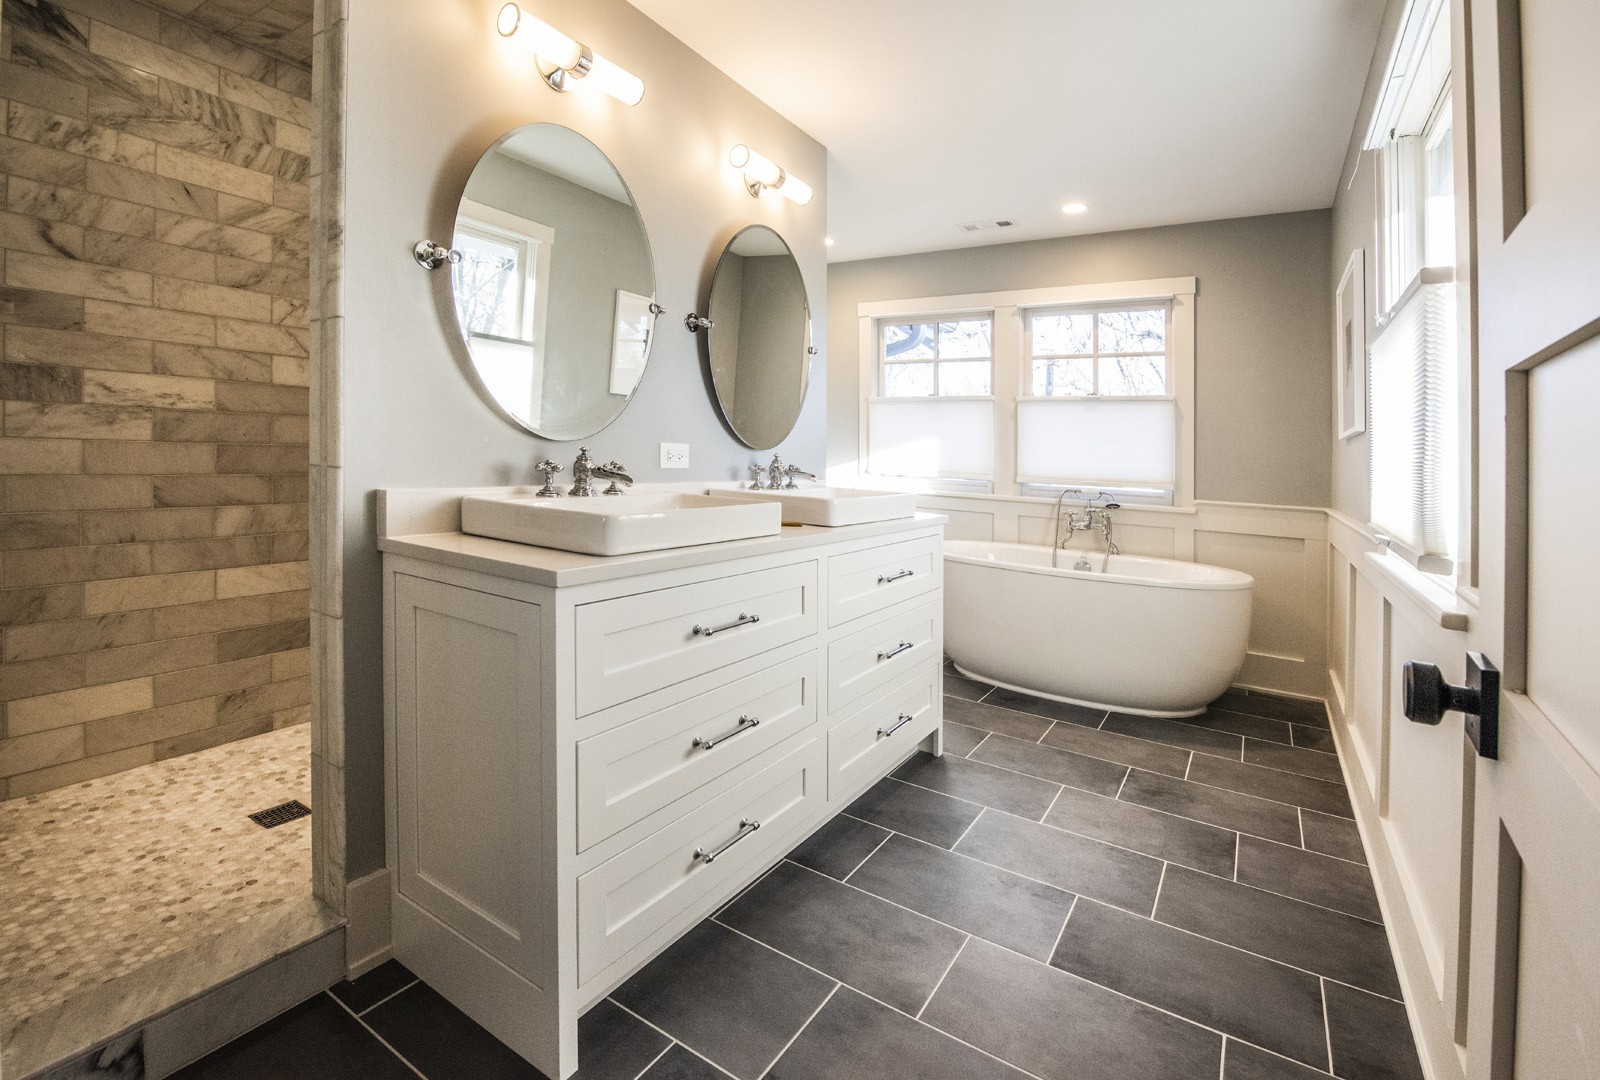 livco bathroom remodel grey tile flooring white double vanity vessel sinks garden tub & open shower